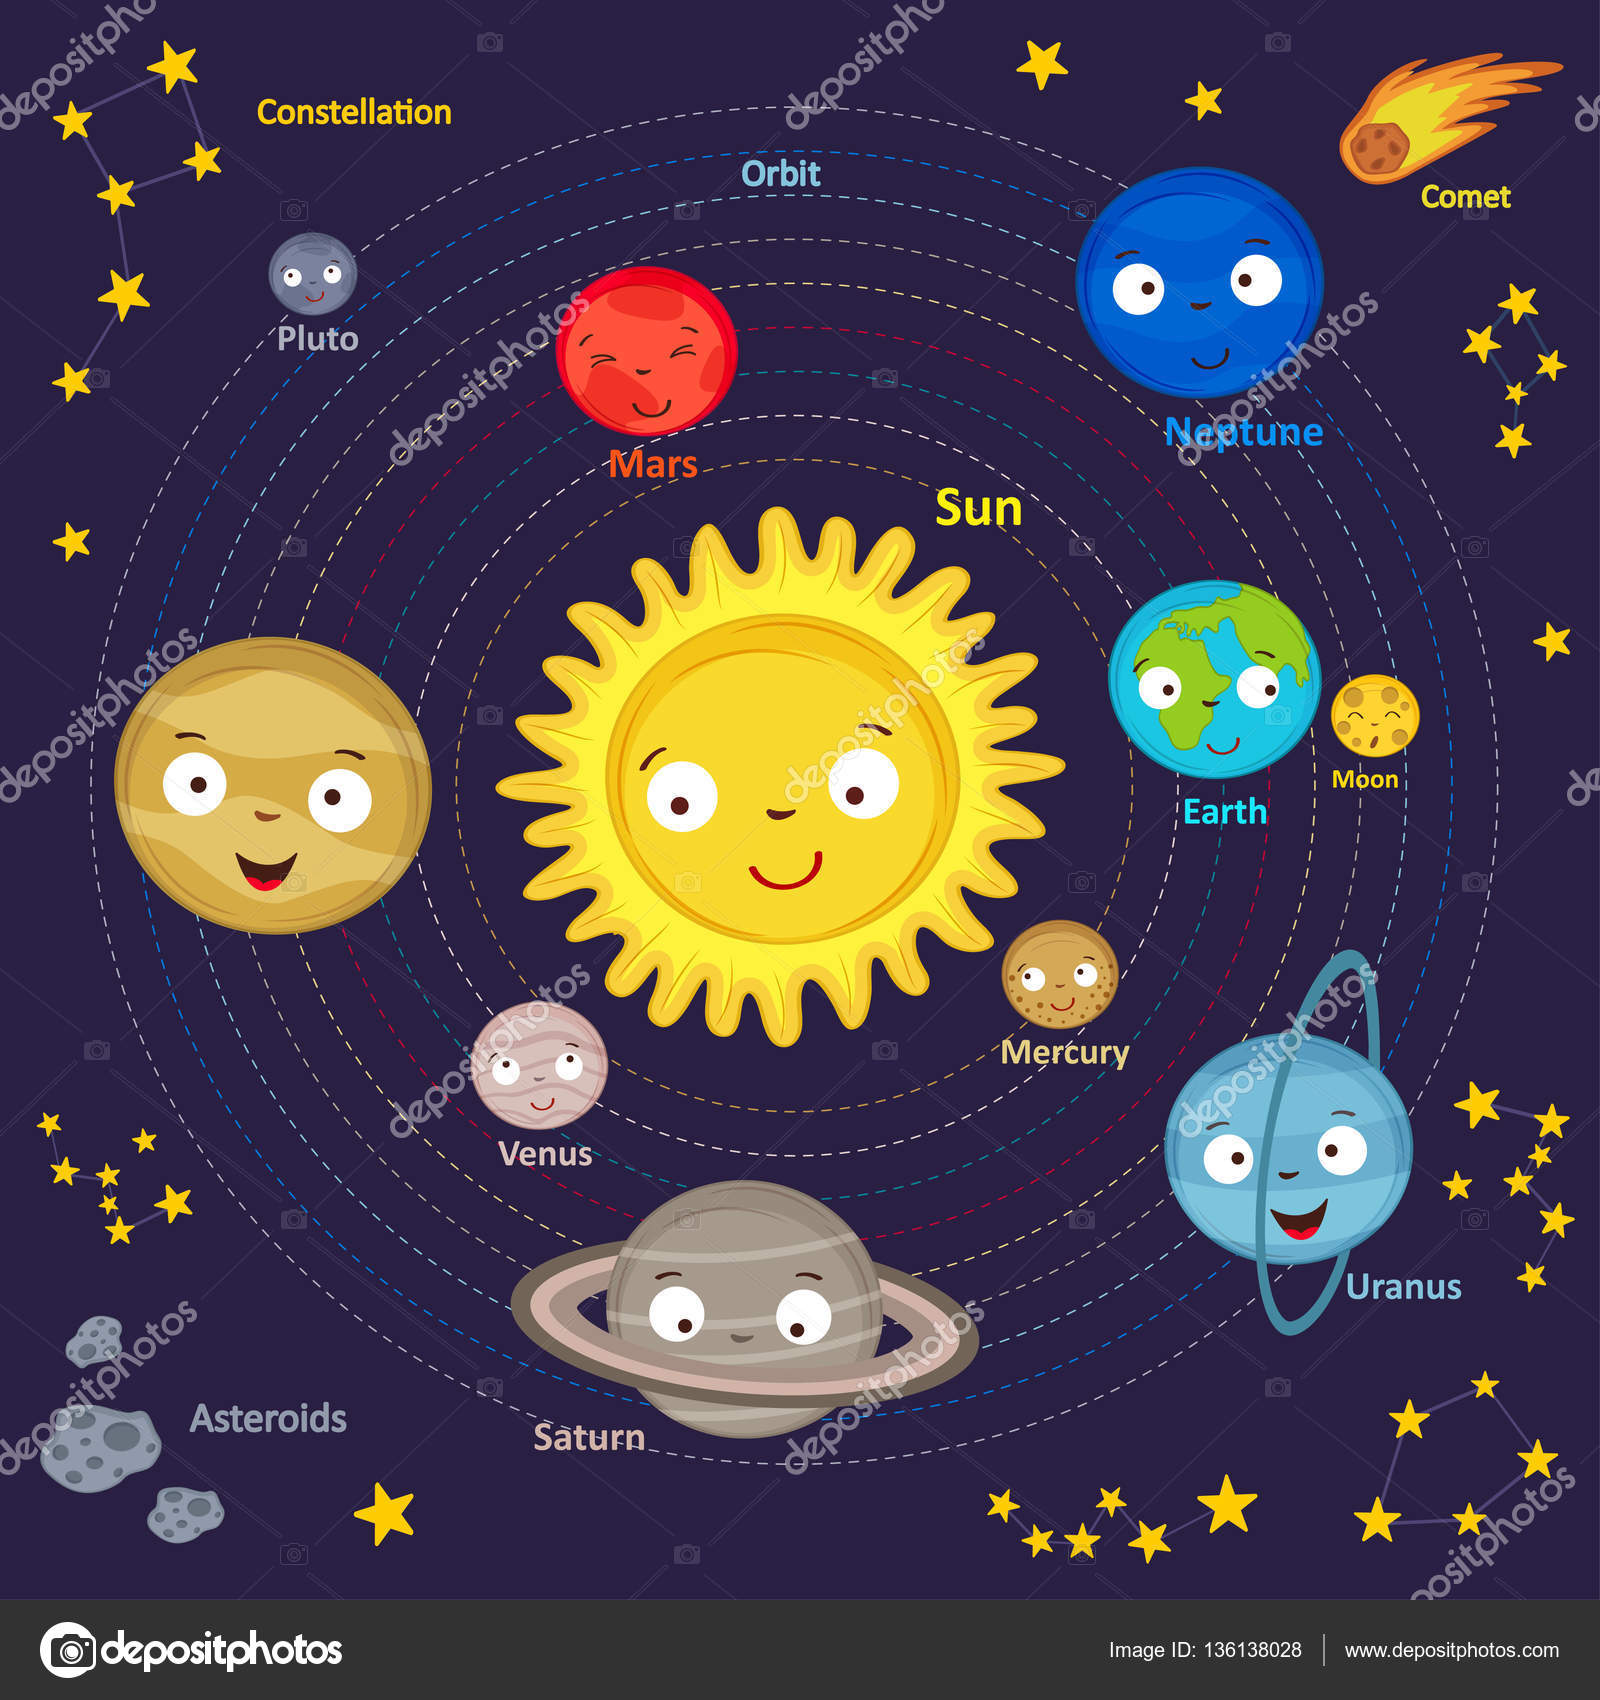 Pluto and spaceships imágenes de stock de arte vectorial | Depositphotos